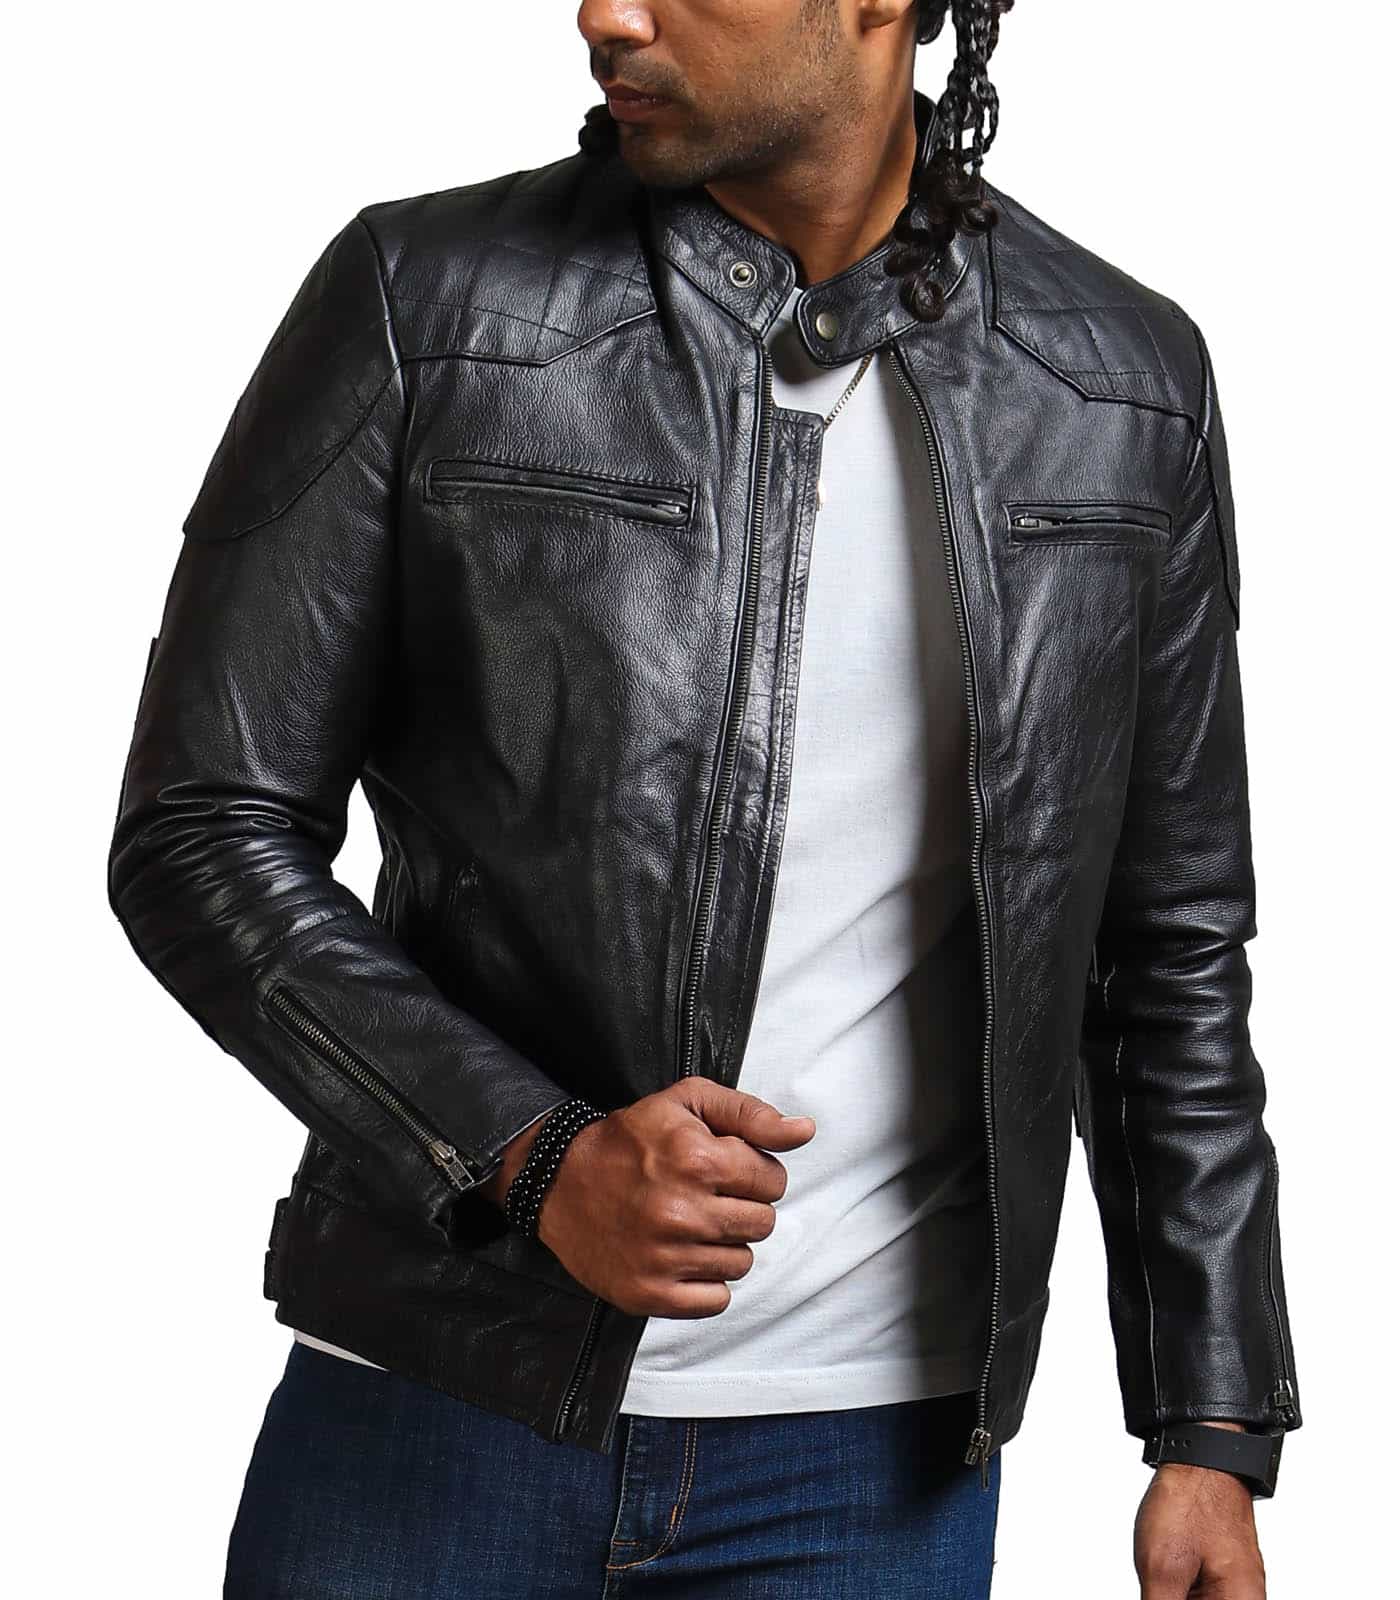 David Black Leather Jacket | USA Leather Factory